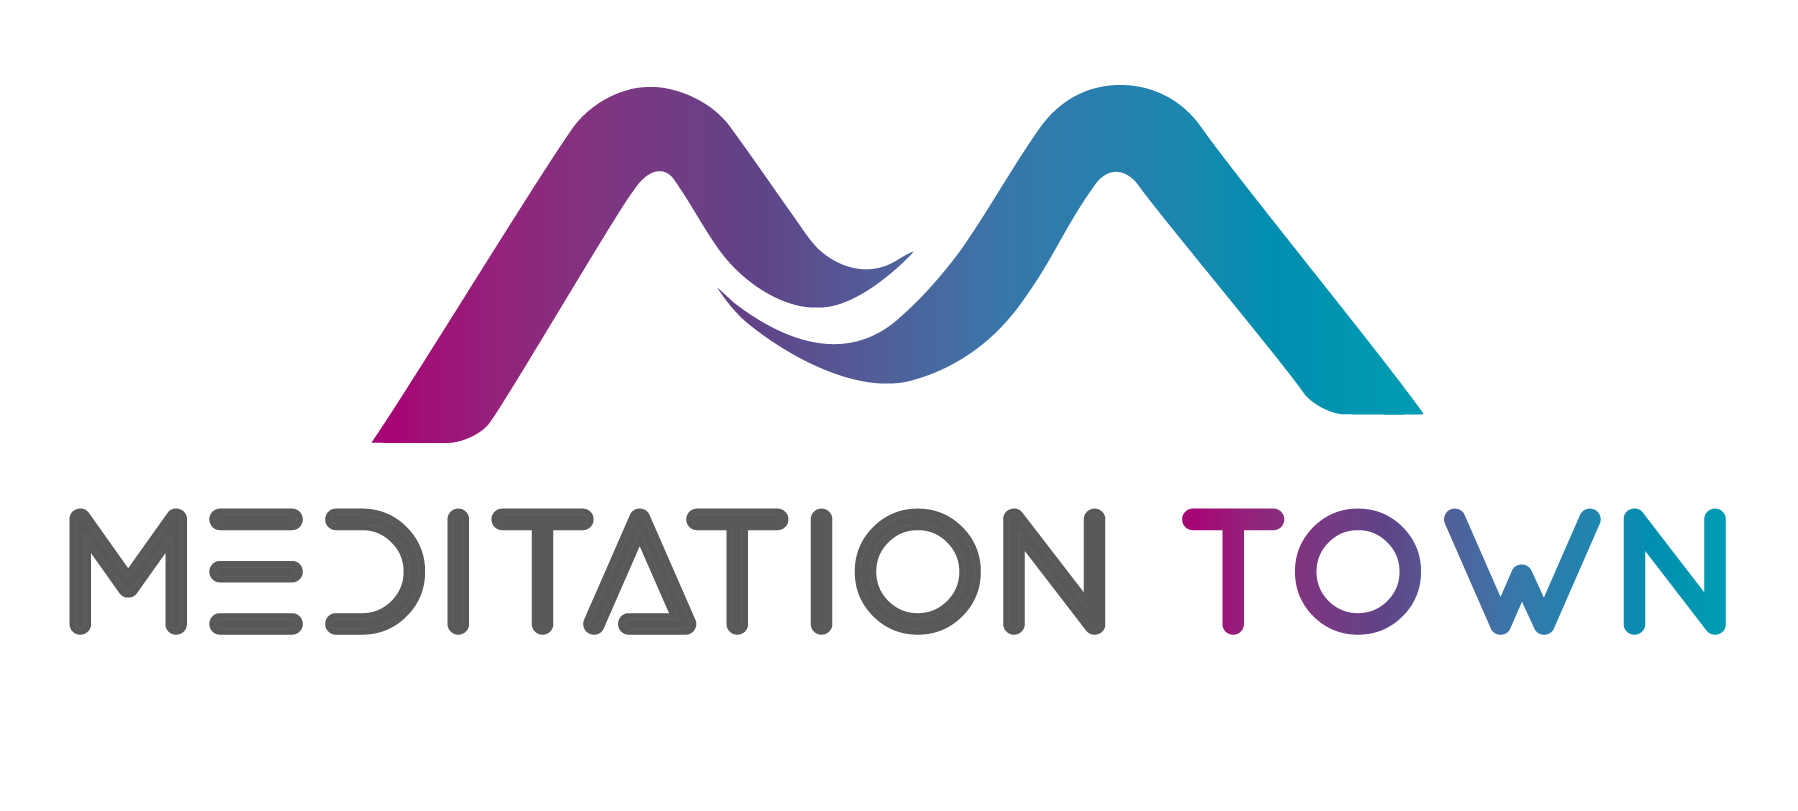 Meditation Town logo